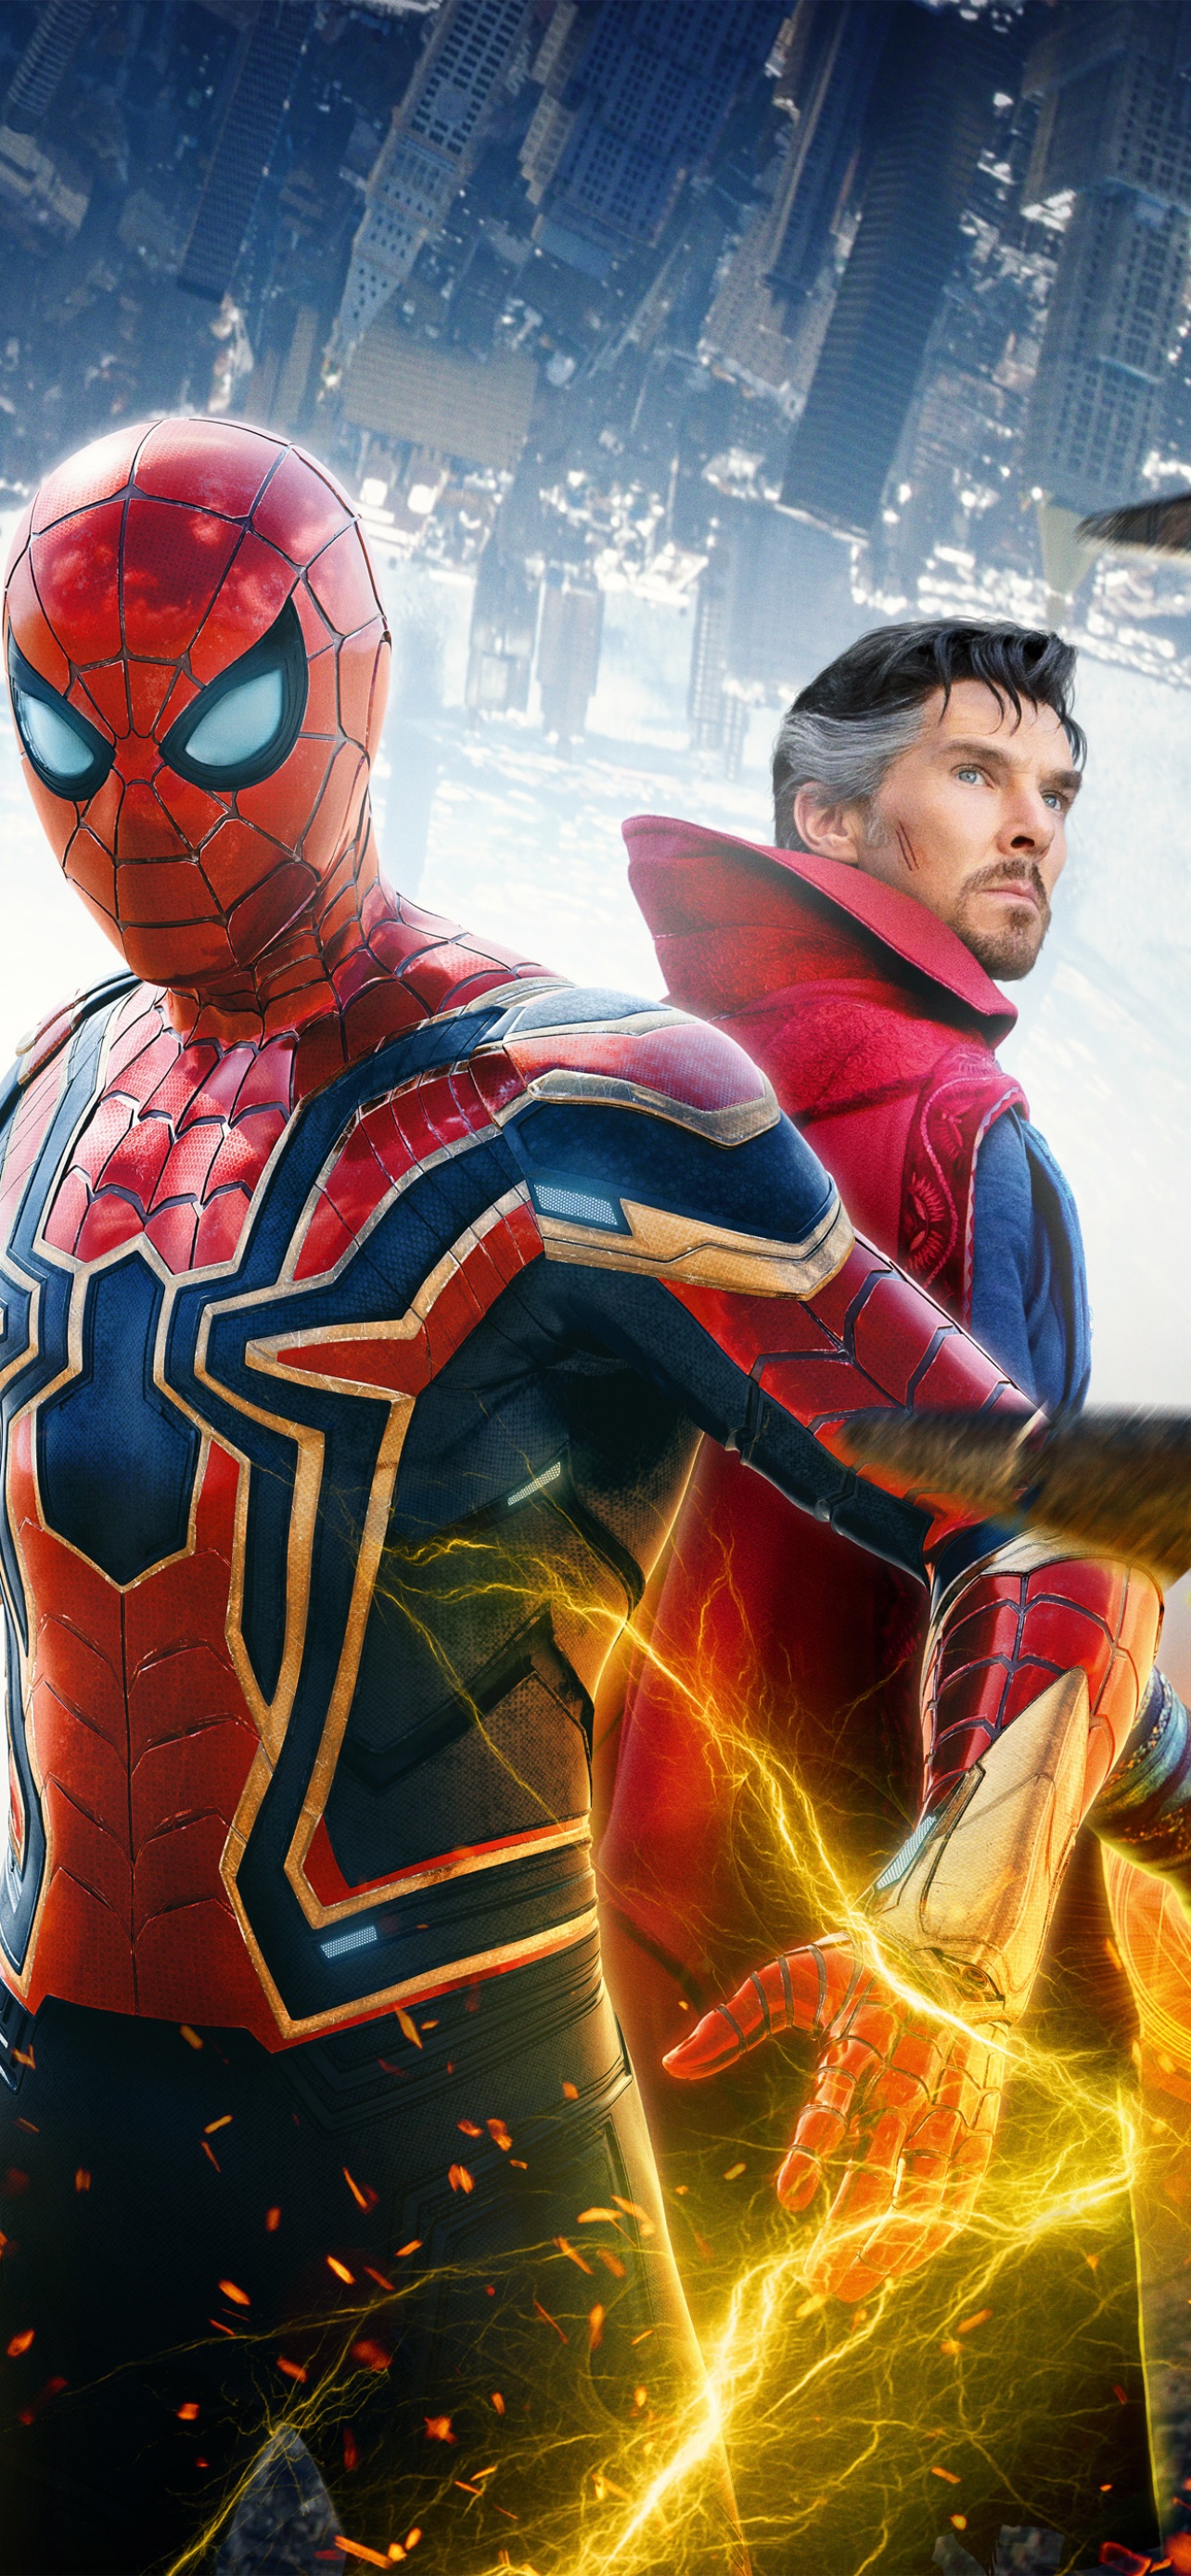 Spider Man: No Way Home Wallpaper 4K, Doctor Strange, 2021 Movies, Marvel Comics, Movies